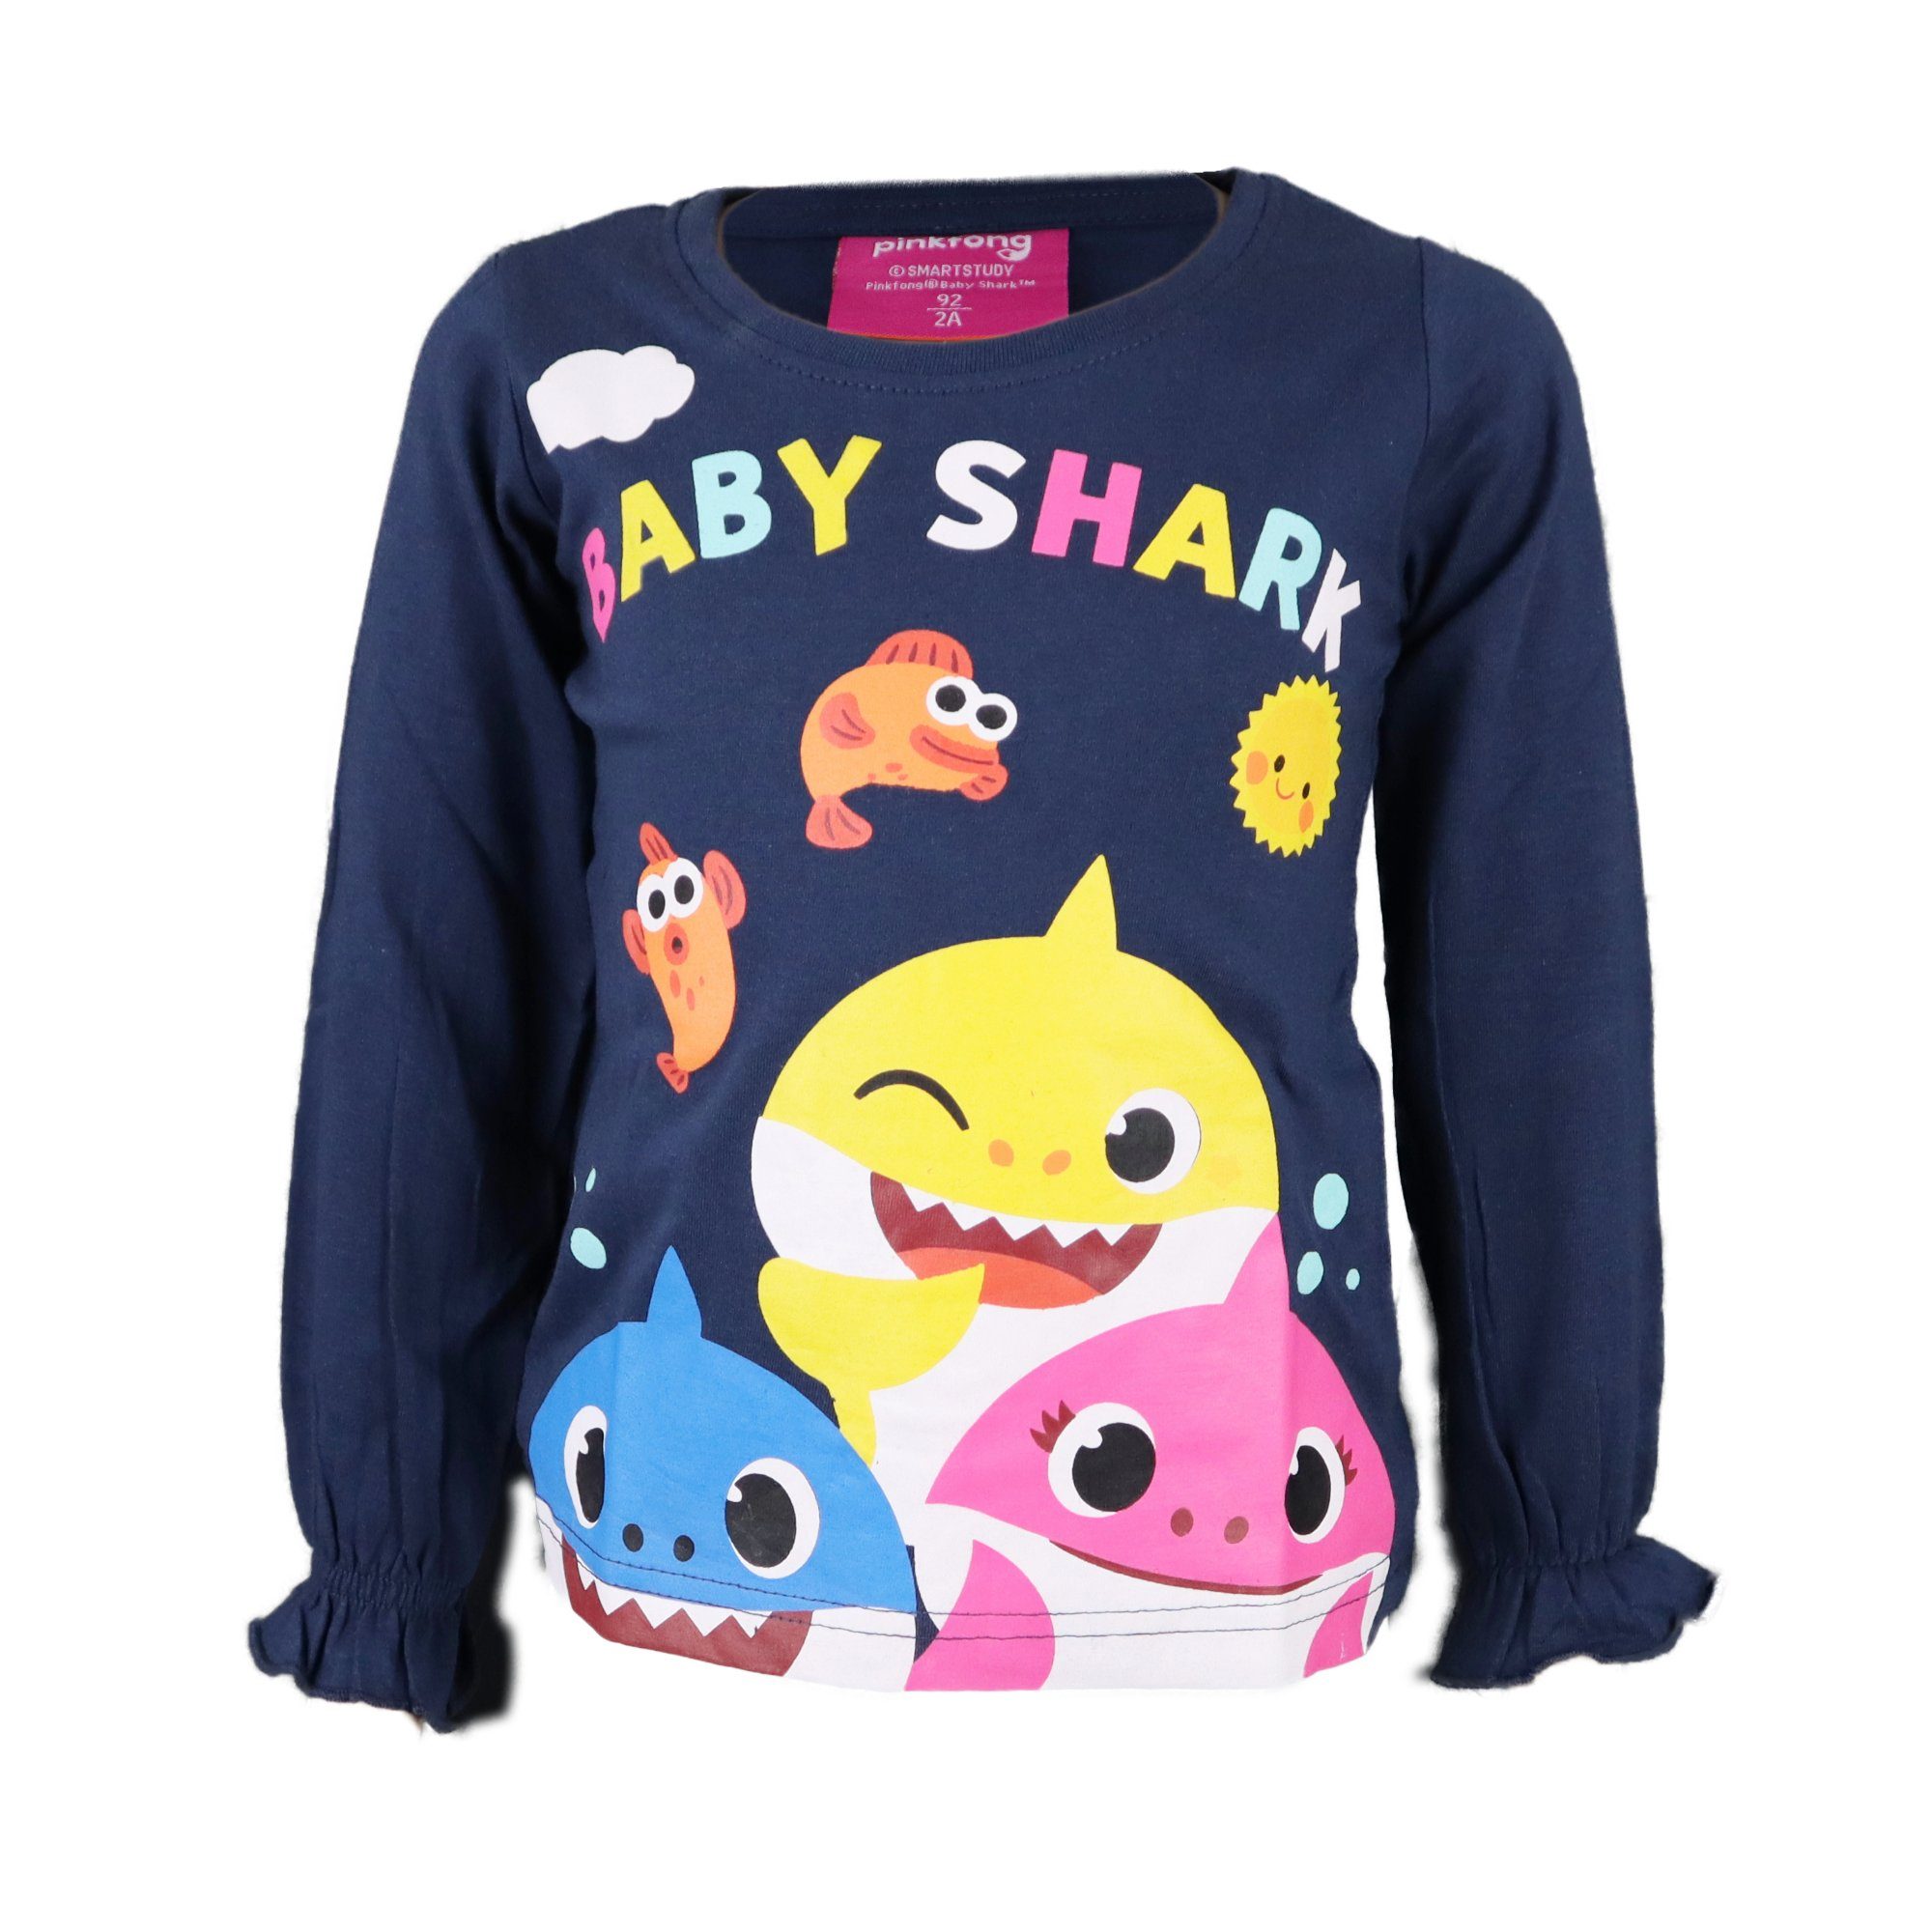 EplusM Langarmshirt Baby Shark Mädchen Kinder Blau Gr. oder Pink bis Shirt 116, 92 langarm Baumwolle